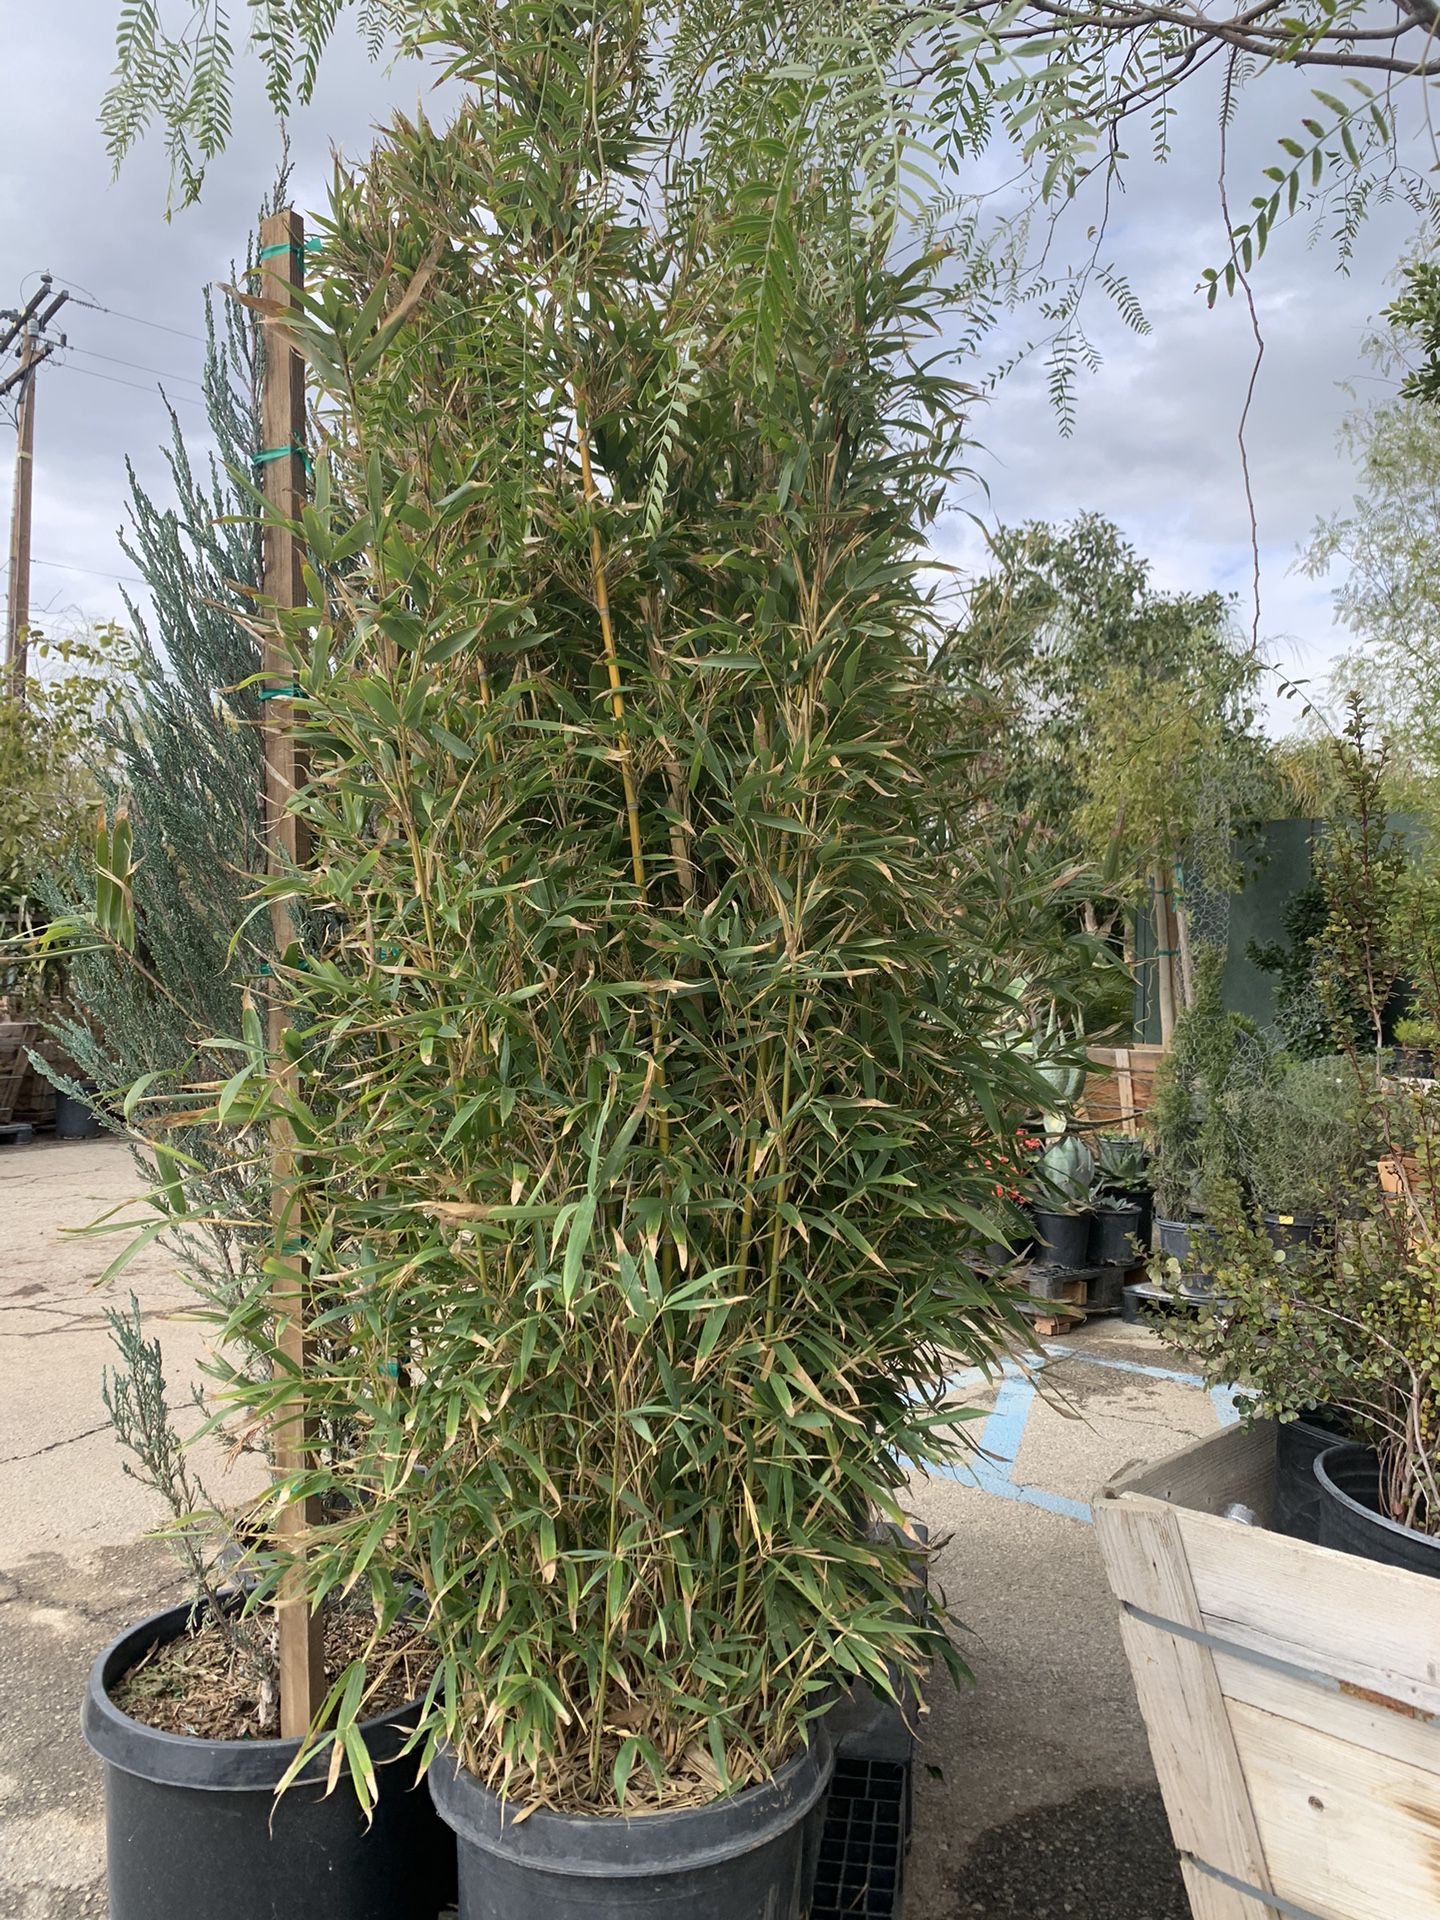 Bamboo Plant 